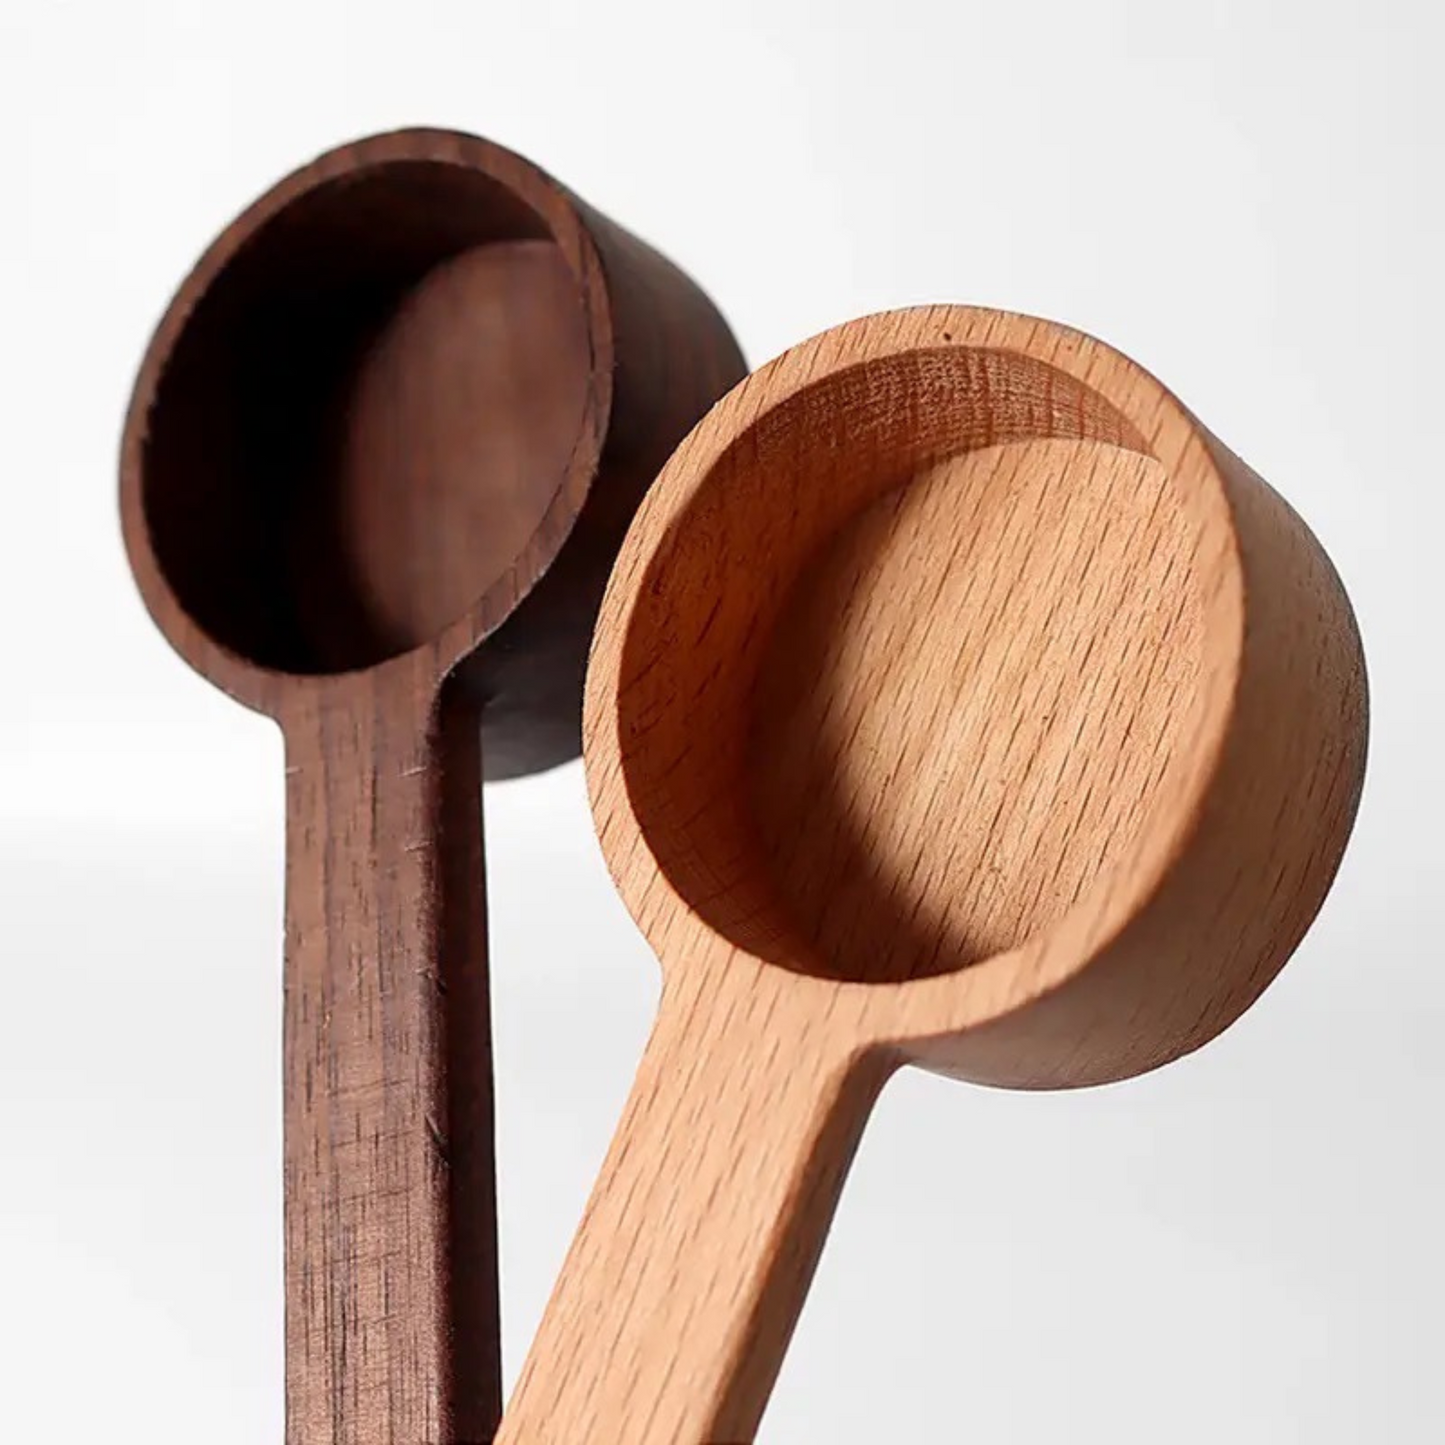 Wooden Coffee Measuring Spoon